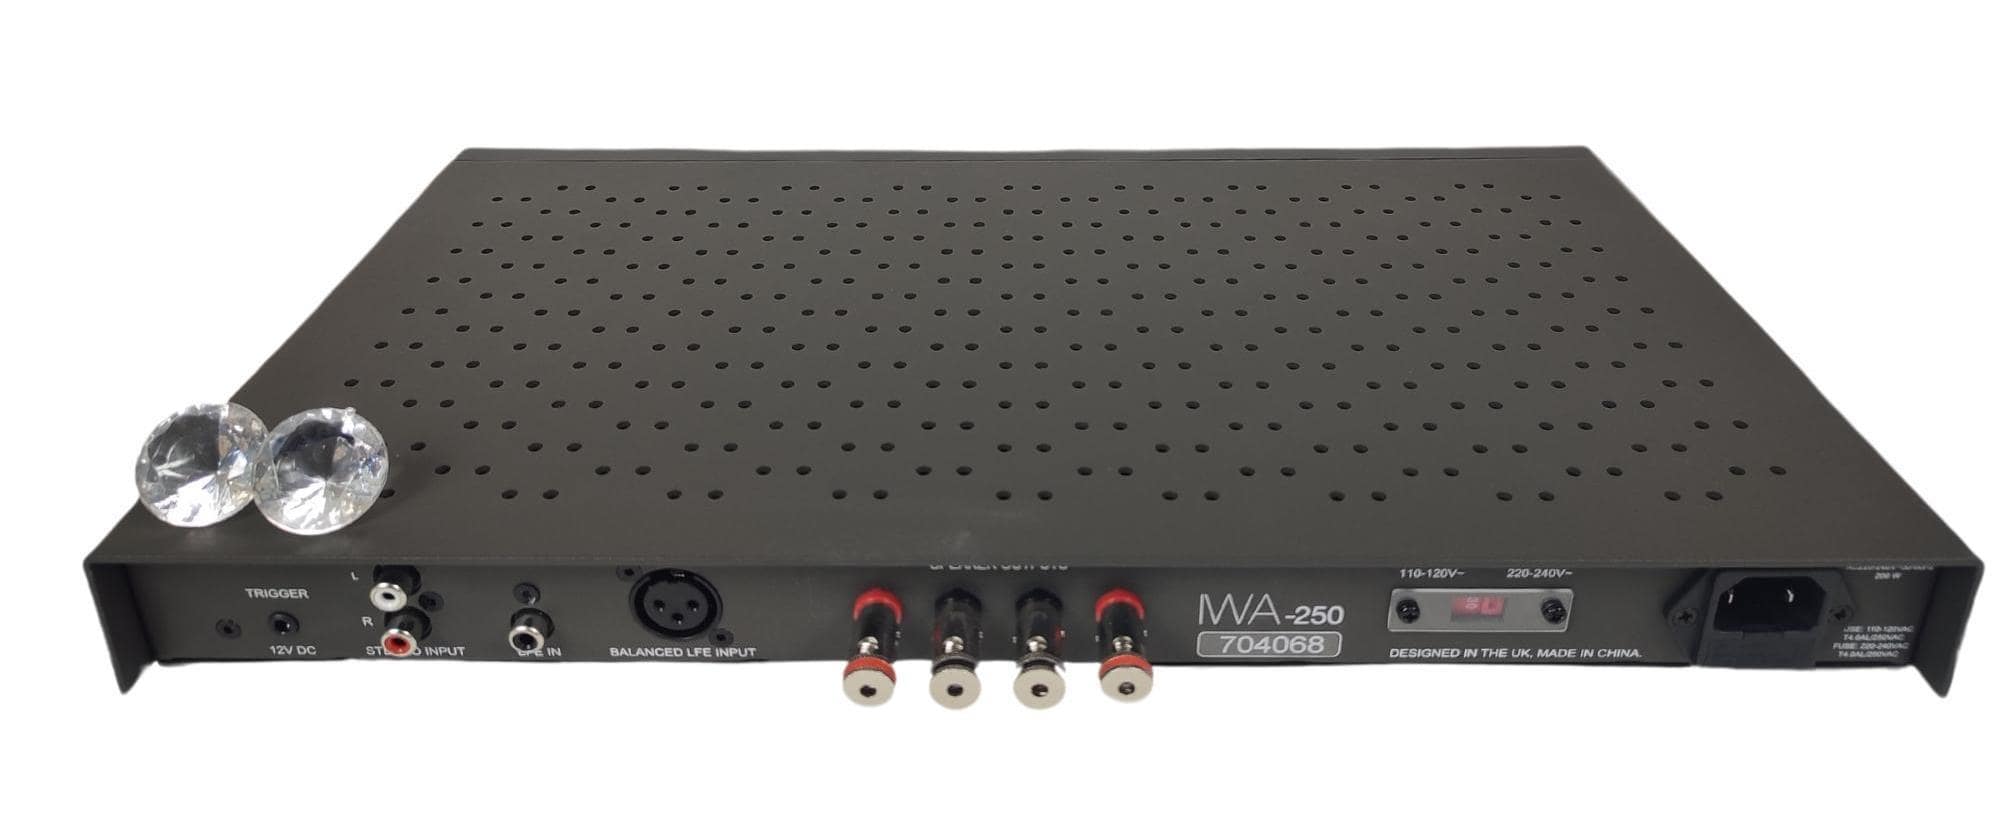 Monitor Audio IWA-250 back